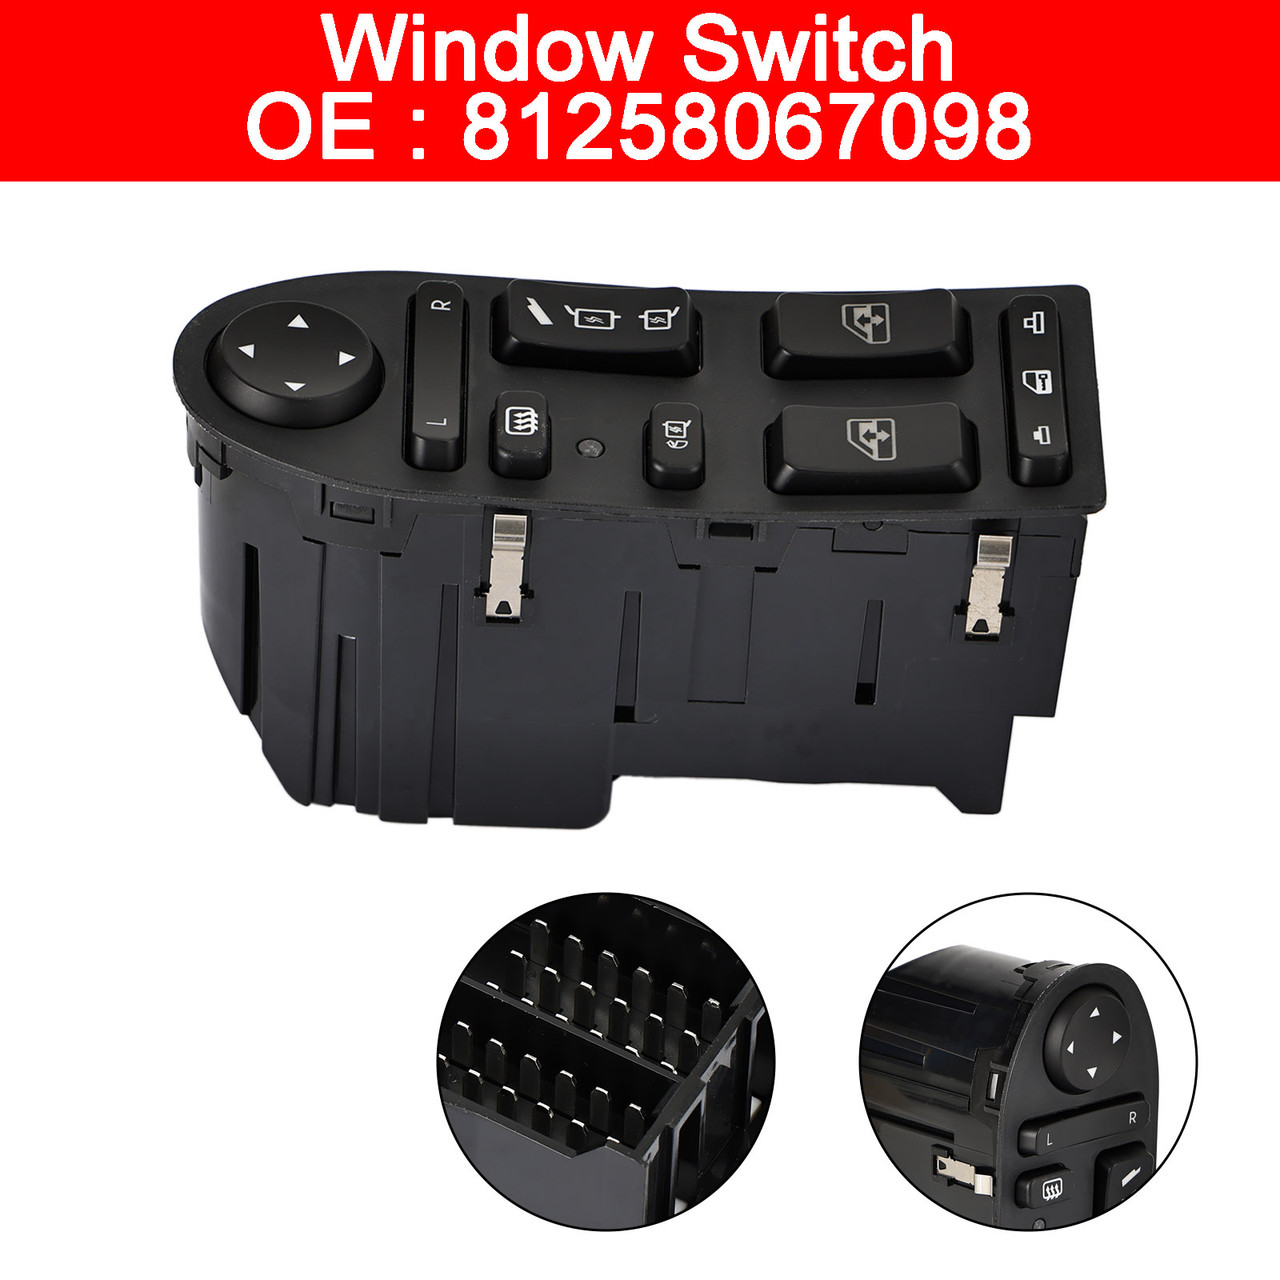 Window Switch Front Left Side for MAN TGA TGM TGL 81258067098 81258067045